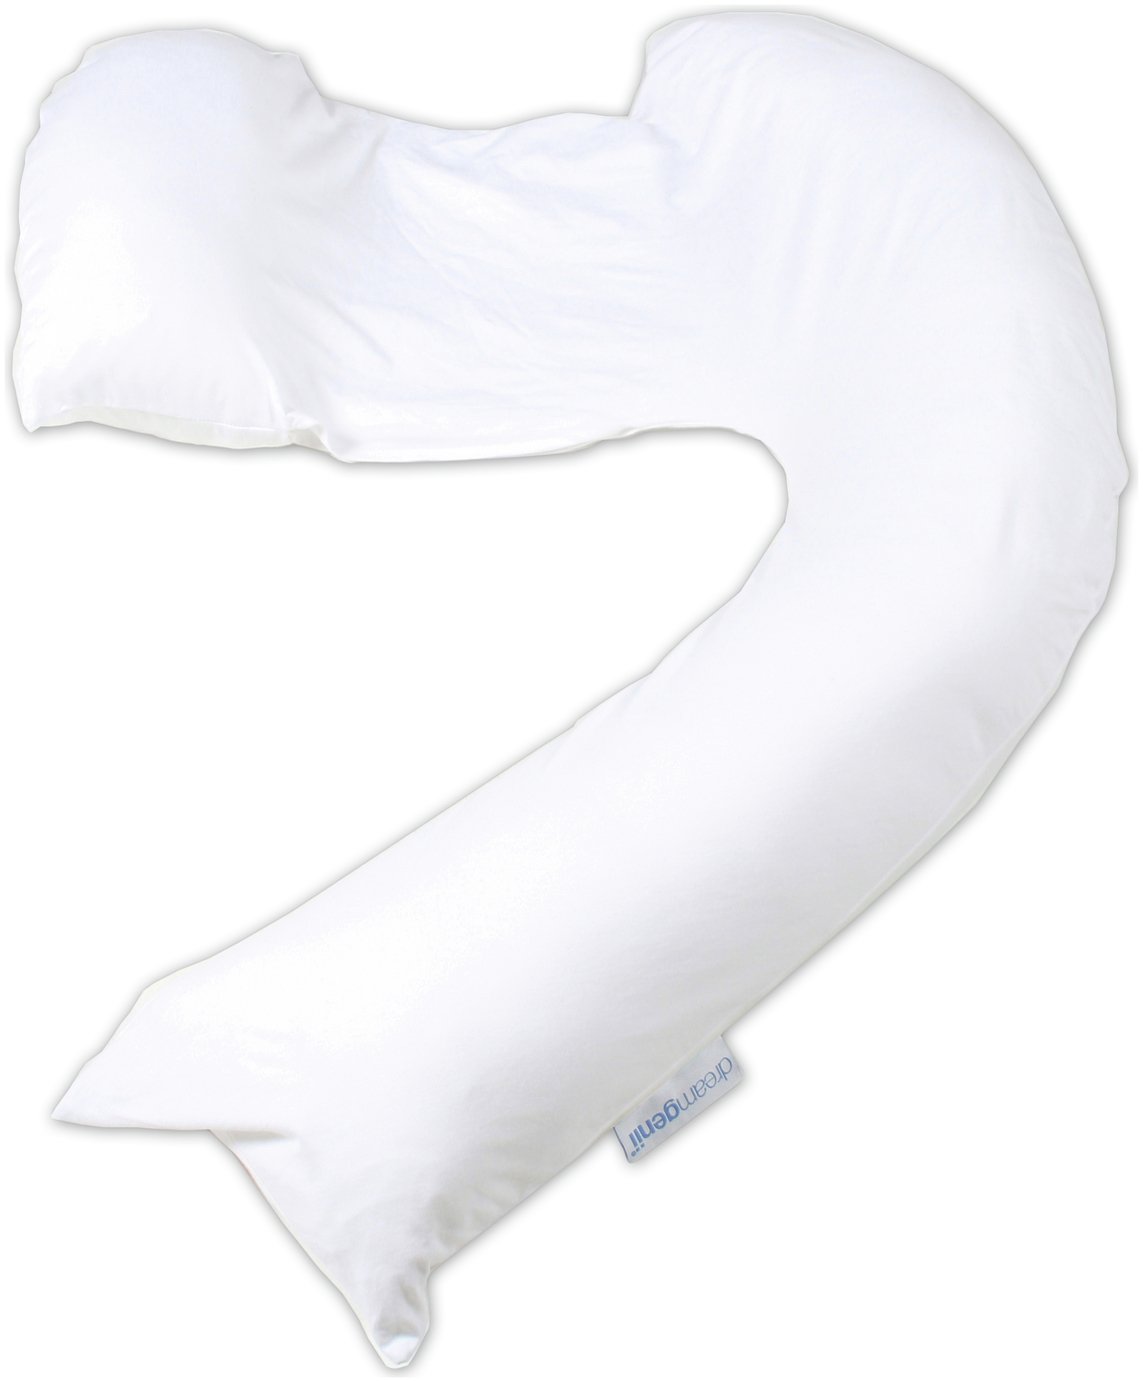 Buy Dreamgenii Pregnancy Pillow - White 